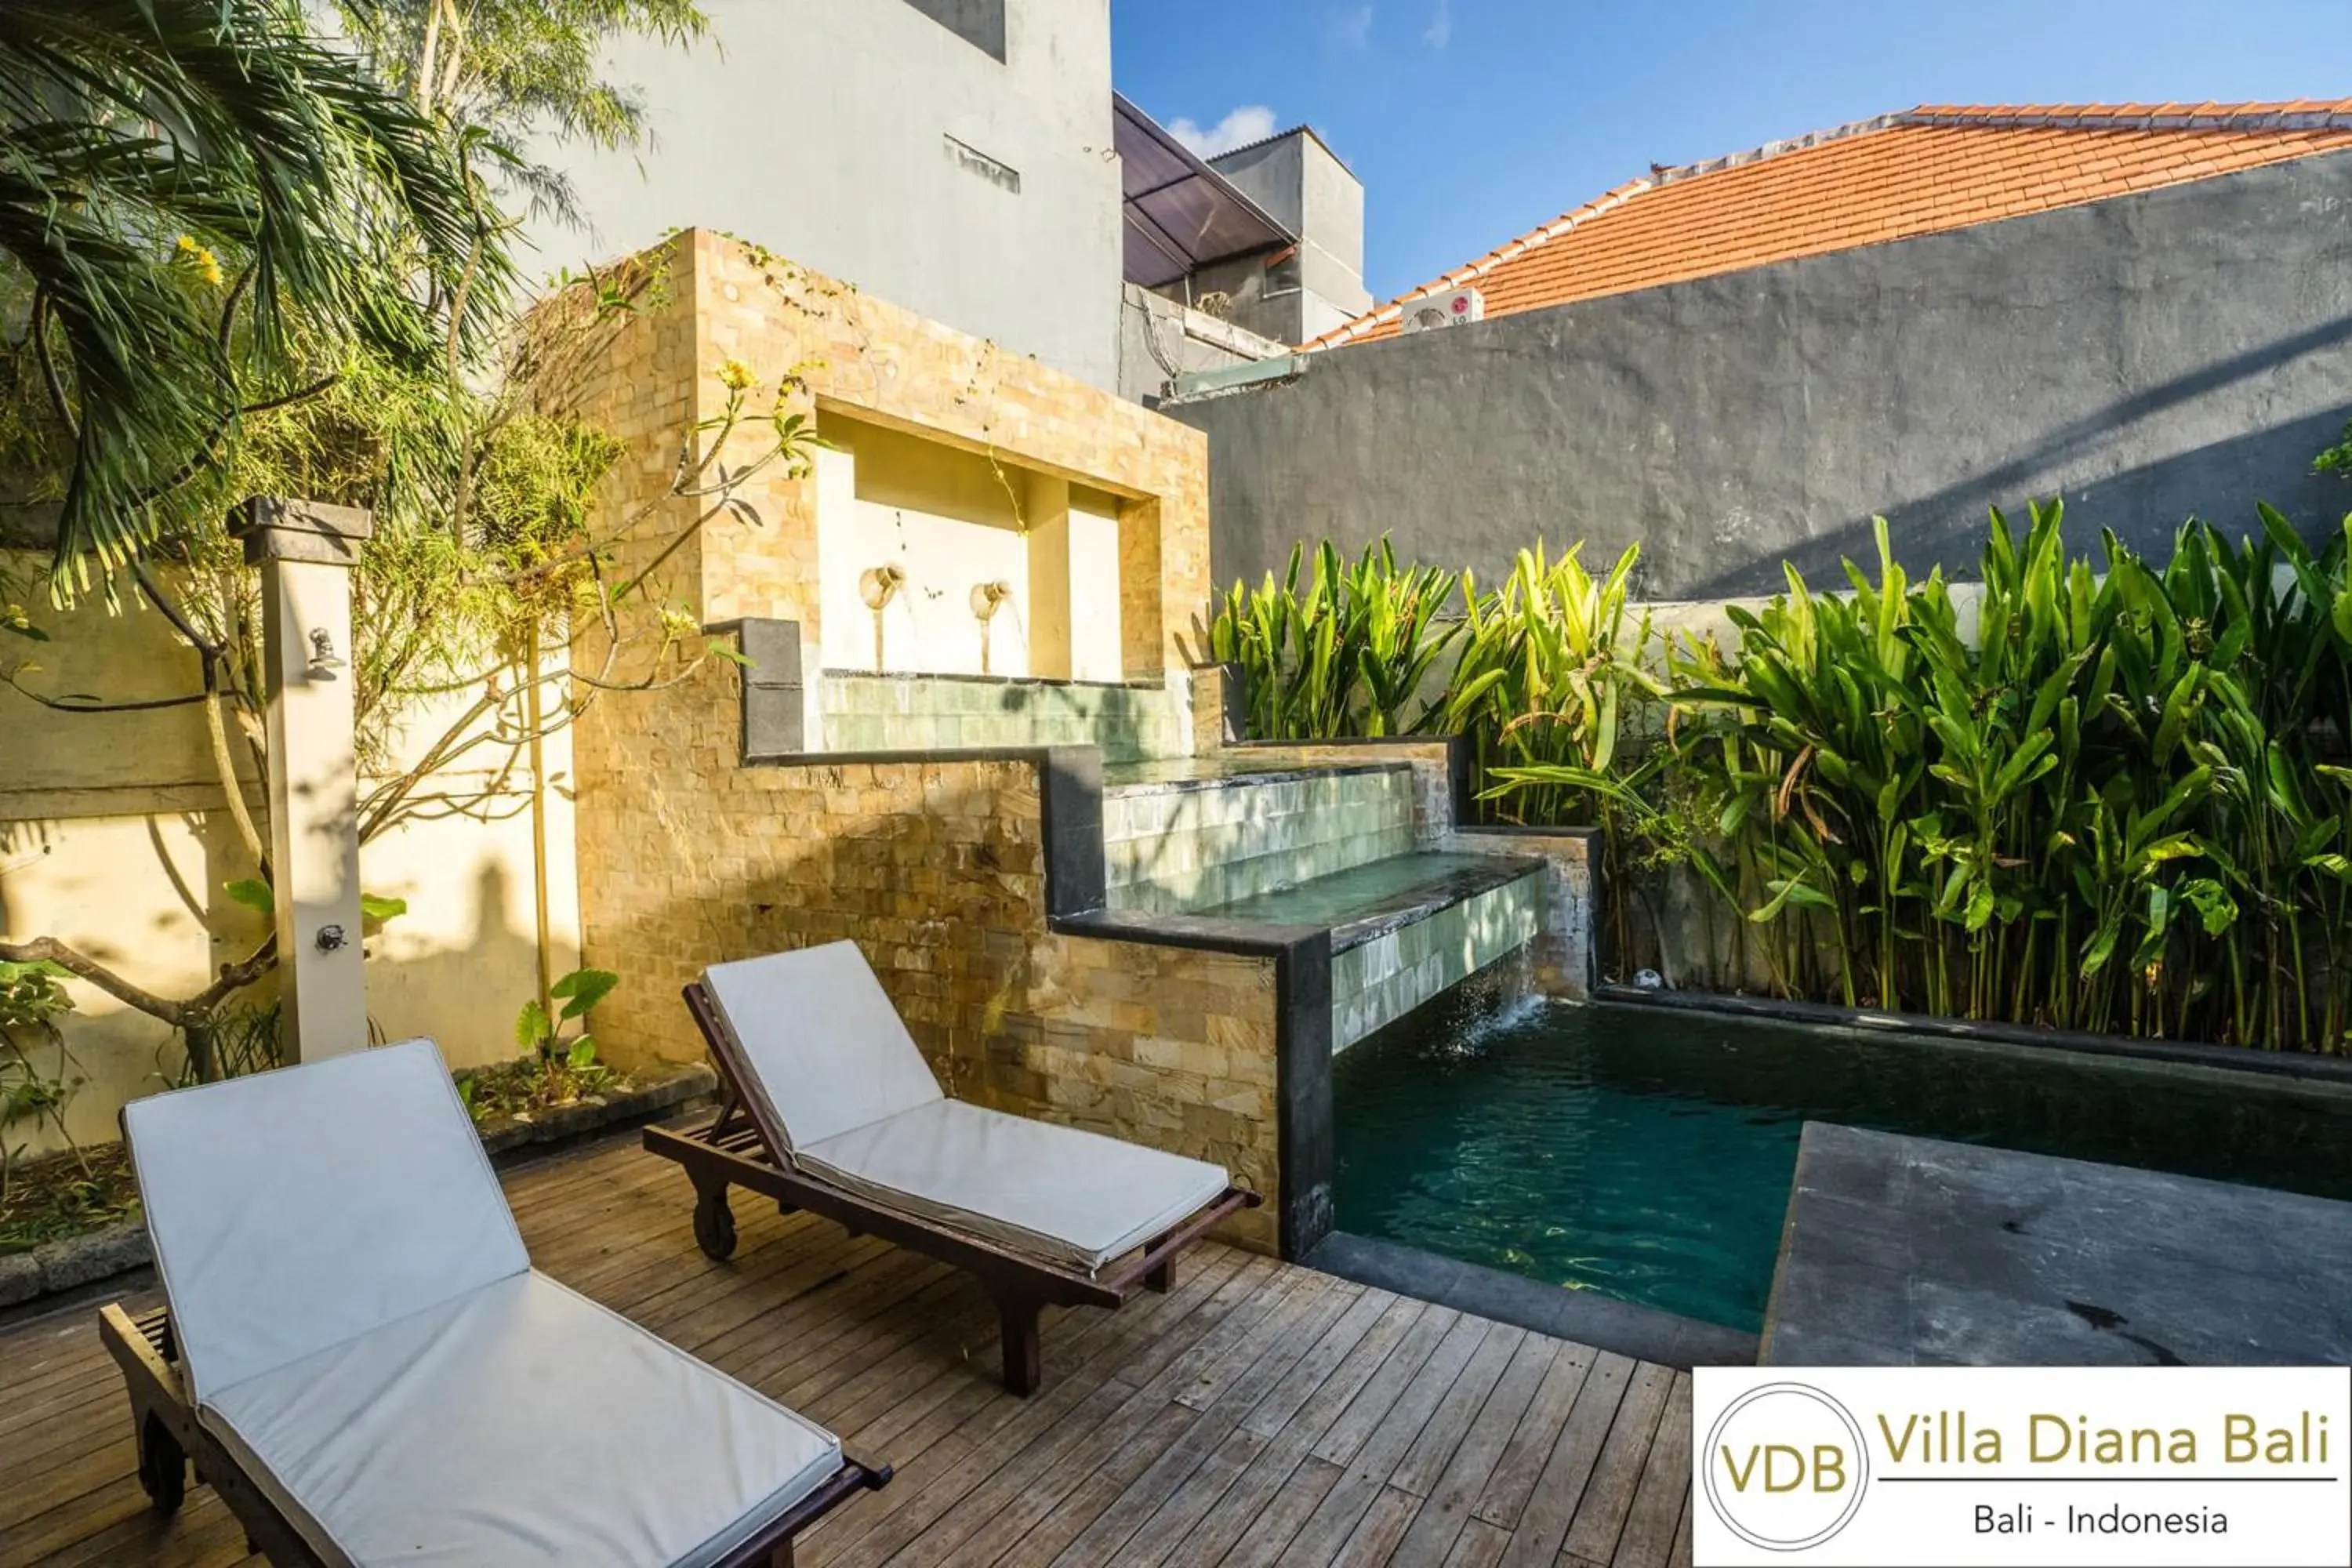 Pool view, Swimming Pool in Villa Diana Bali